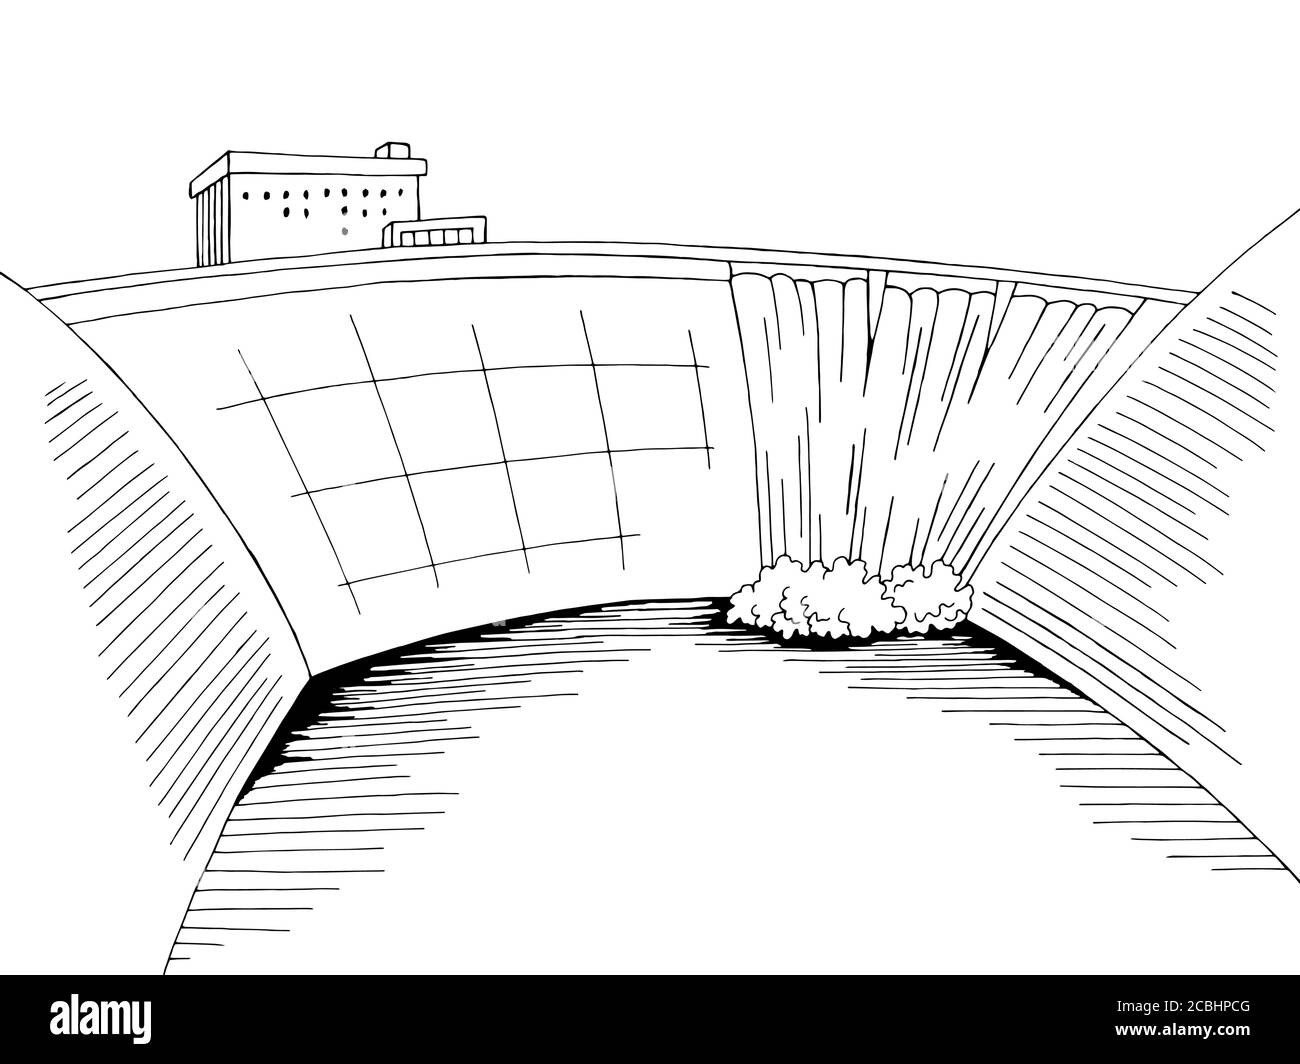 Damm Wasserkraft Fluss Grafik schwarz weiß Landschaft Skizze Illustration Vektor Stock Vektor